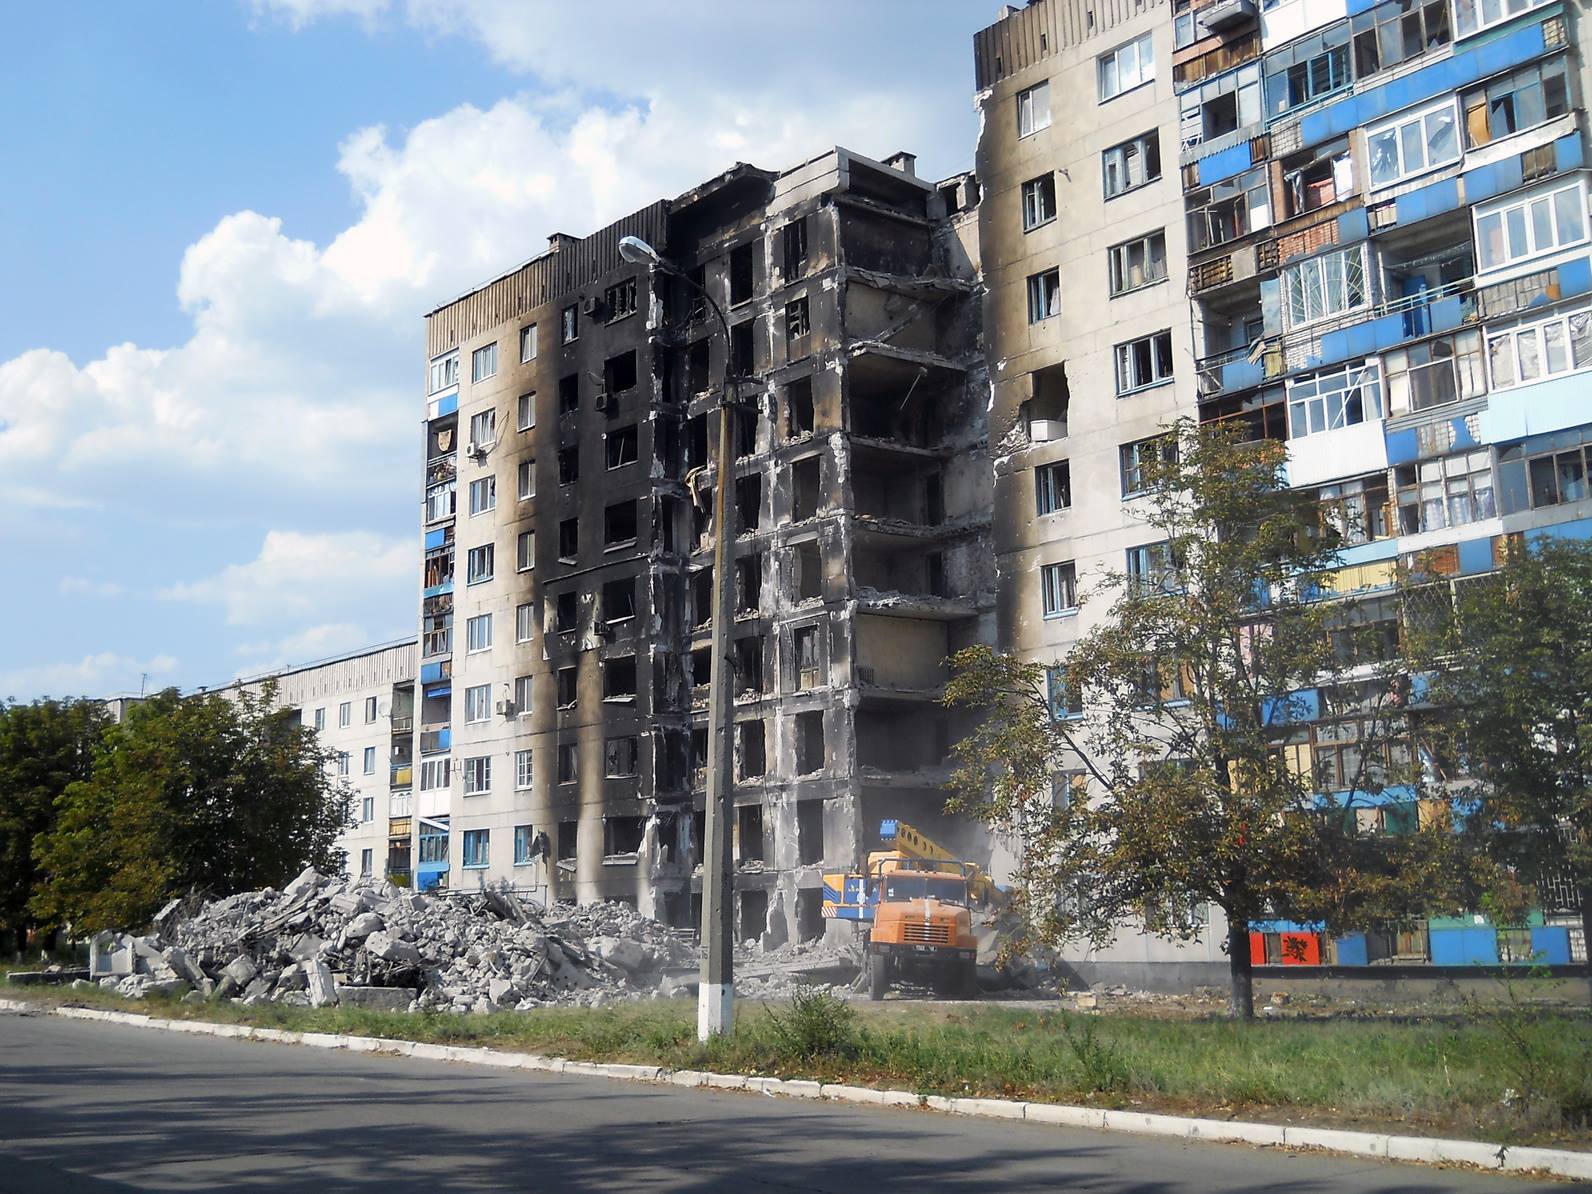 ukraina spalone domy - Radio Merkury - Fotolia.pl